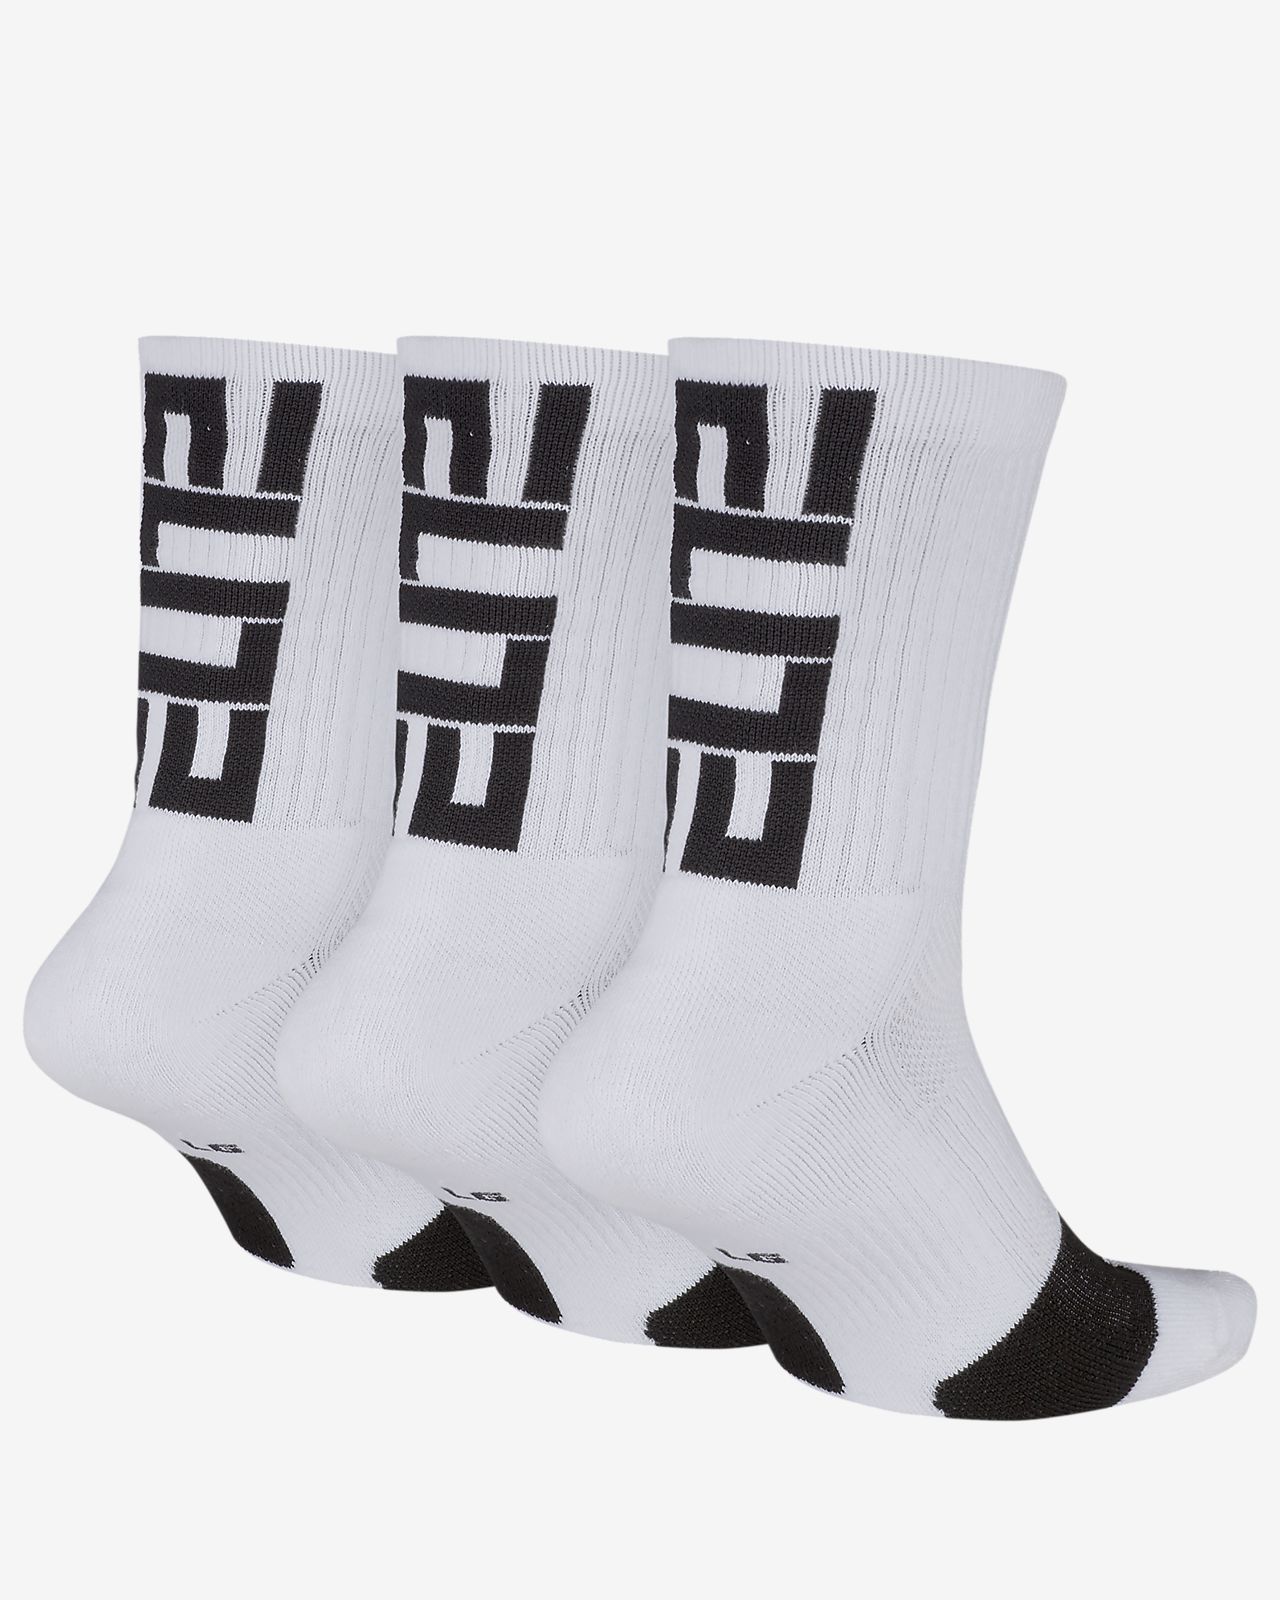 new nike elites socks